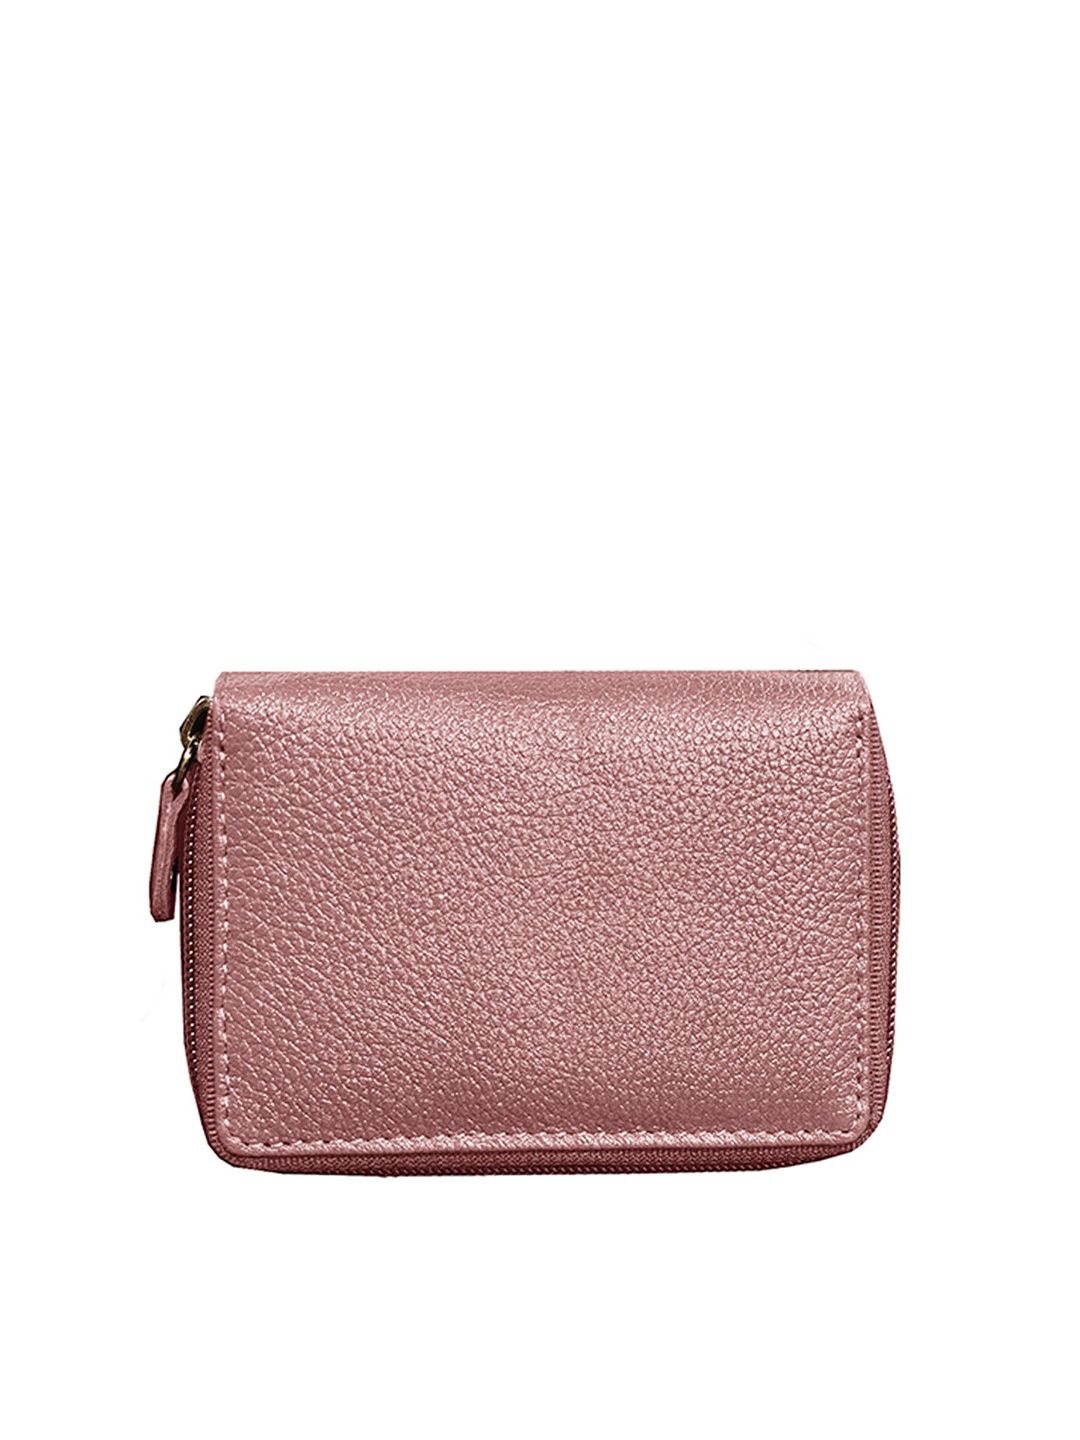 ABYS Women Pink Textured Genuine Leather Zip Around Wallet Price in India